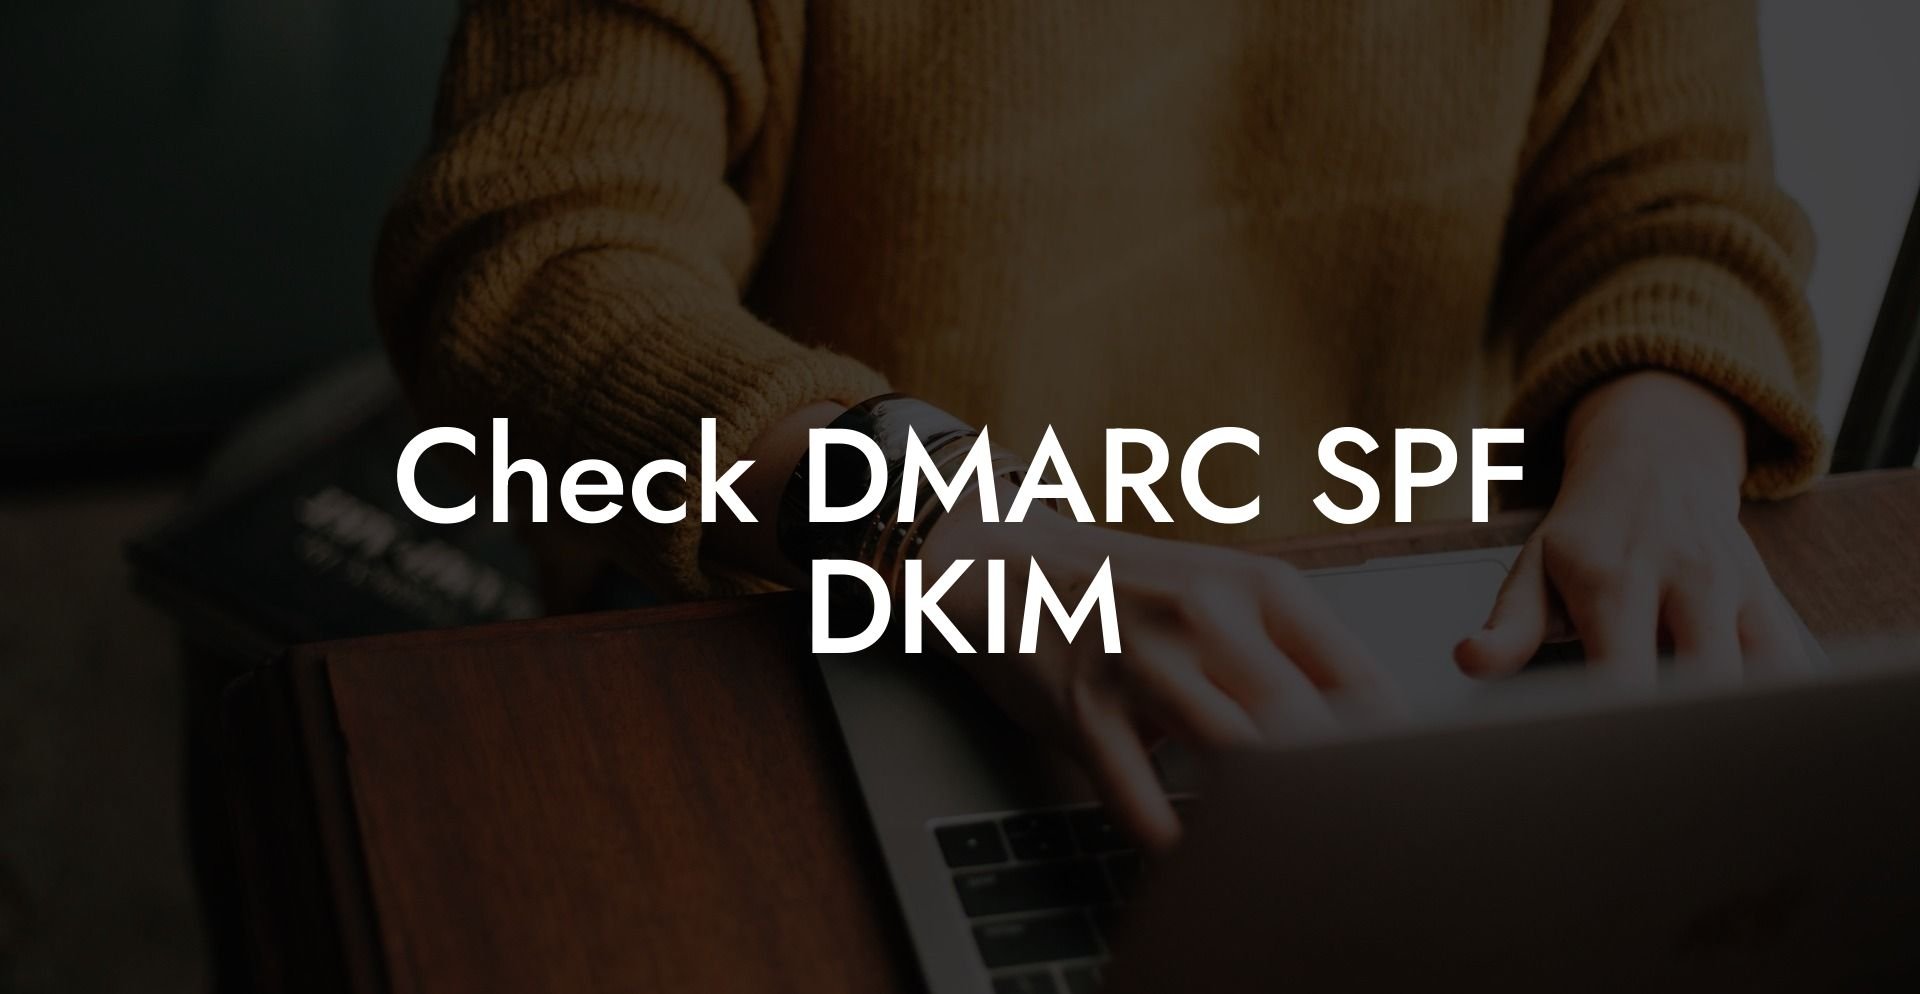 Check DMARC SPF DKIM